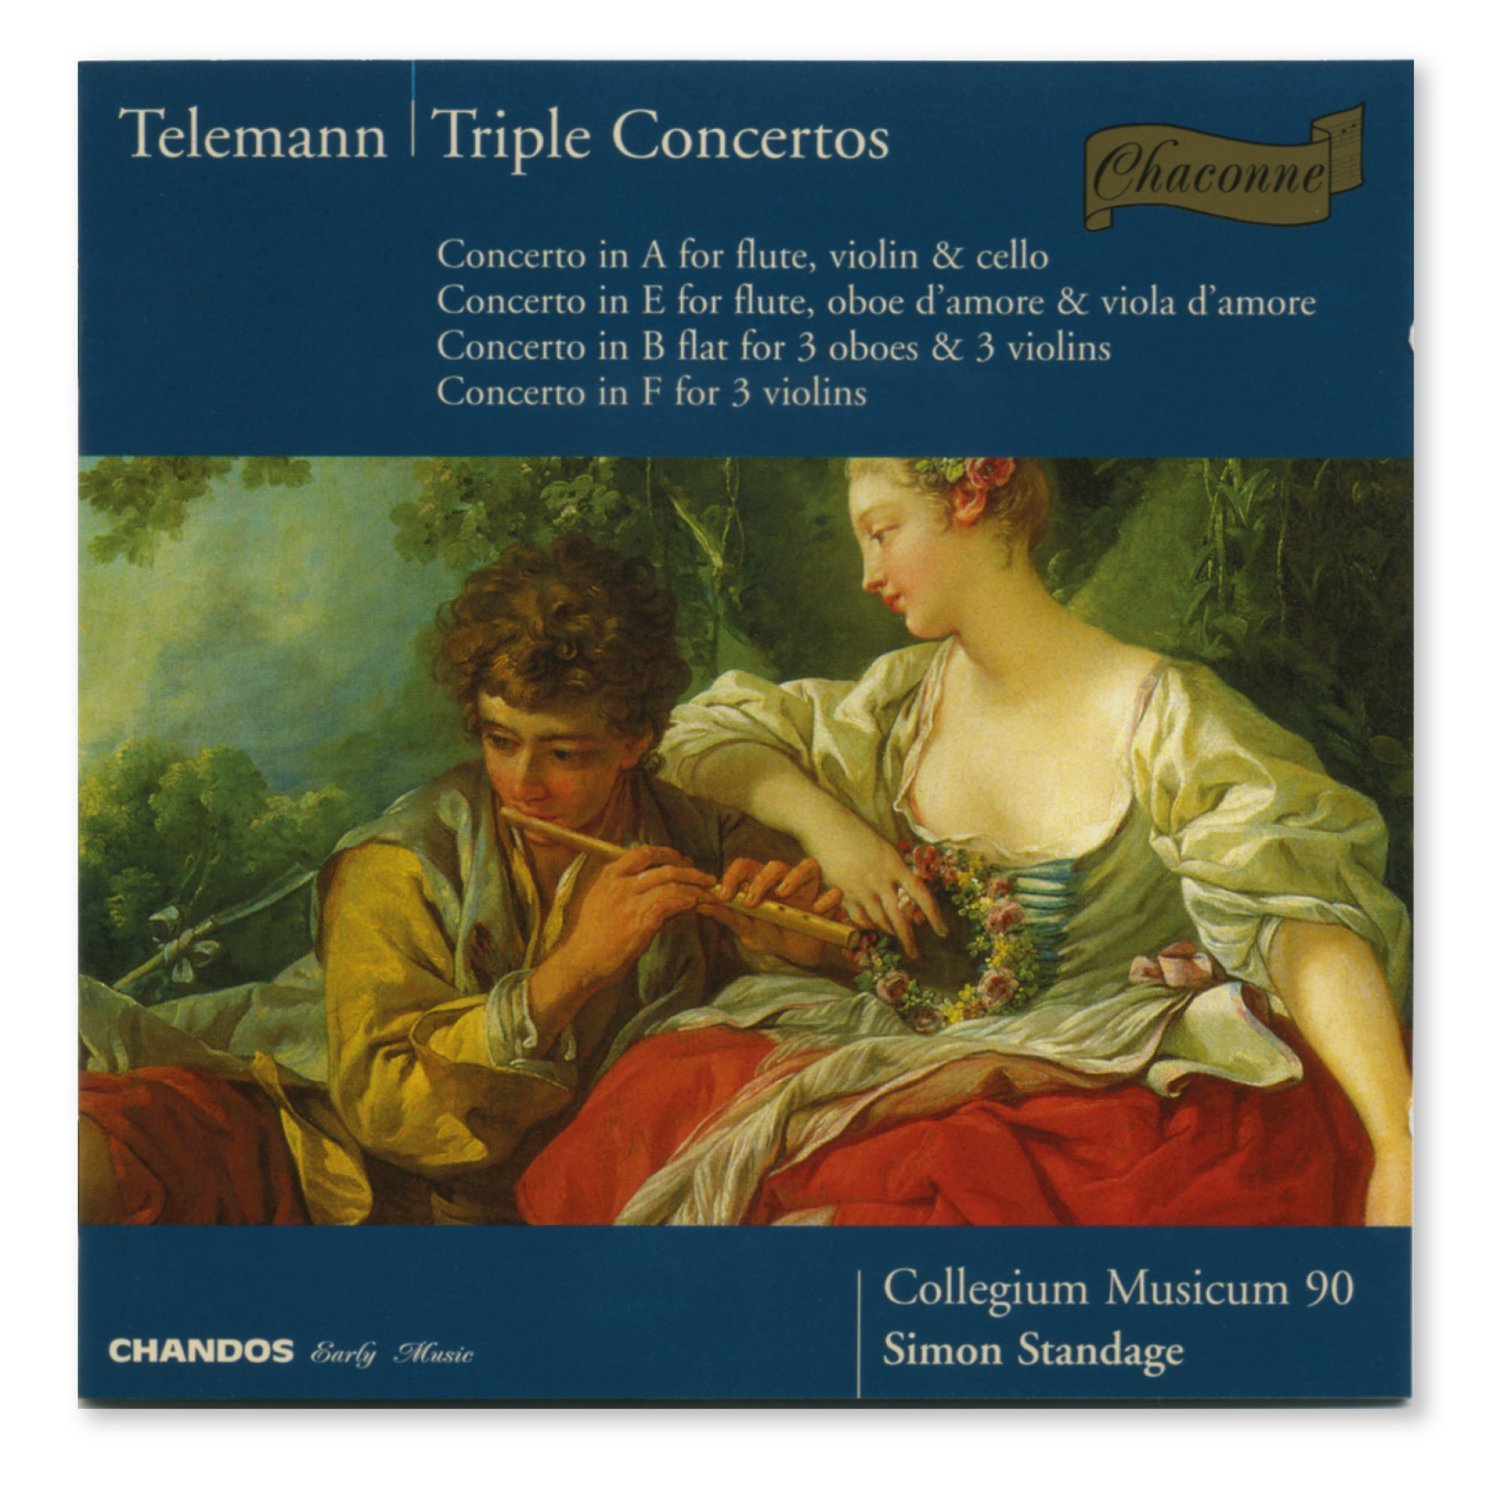 Telemann Triple Concertos (Chandos)